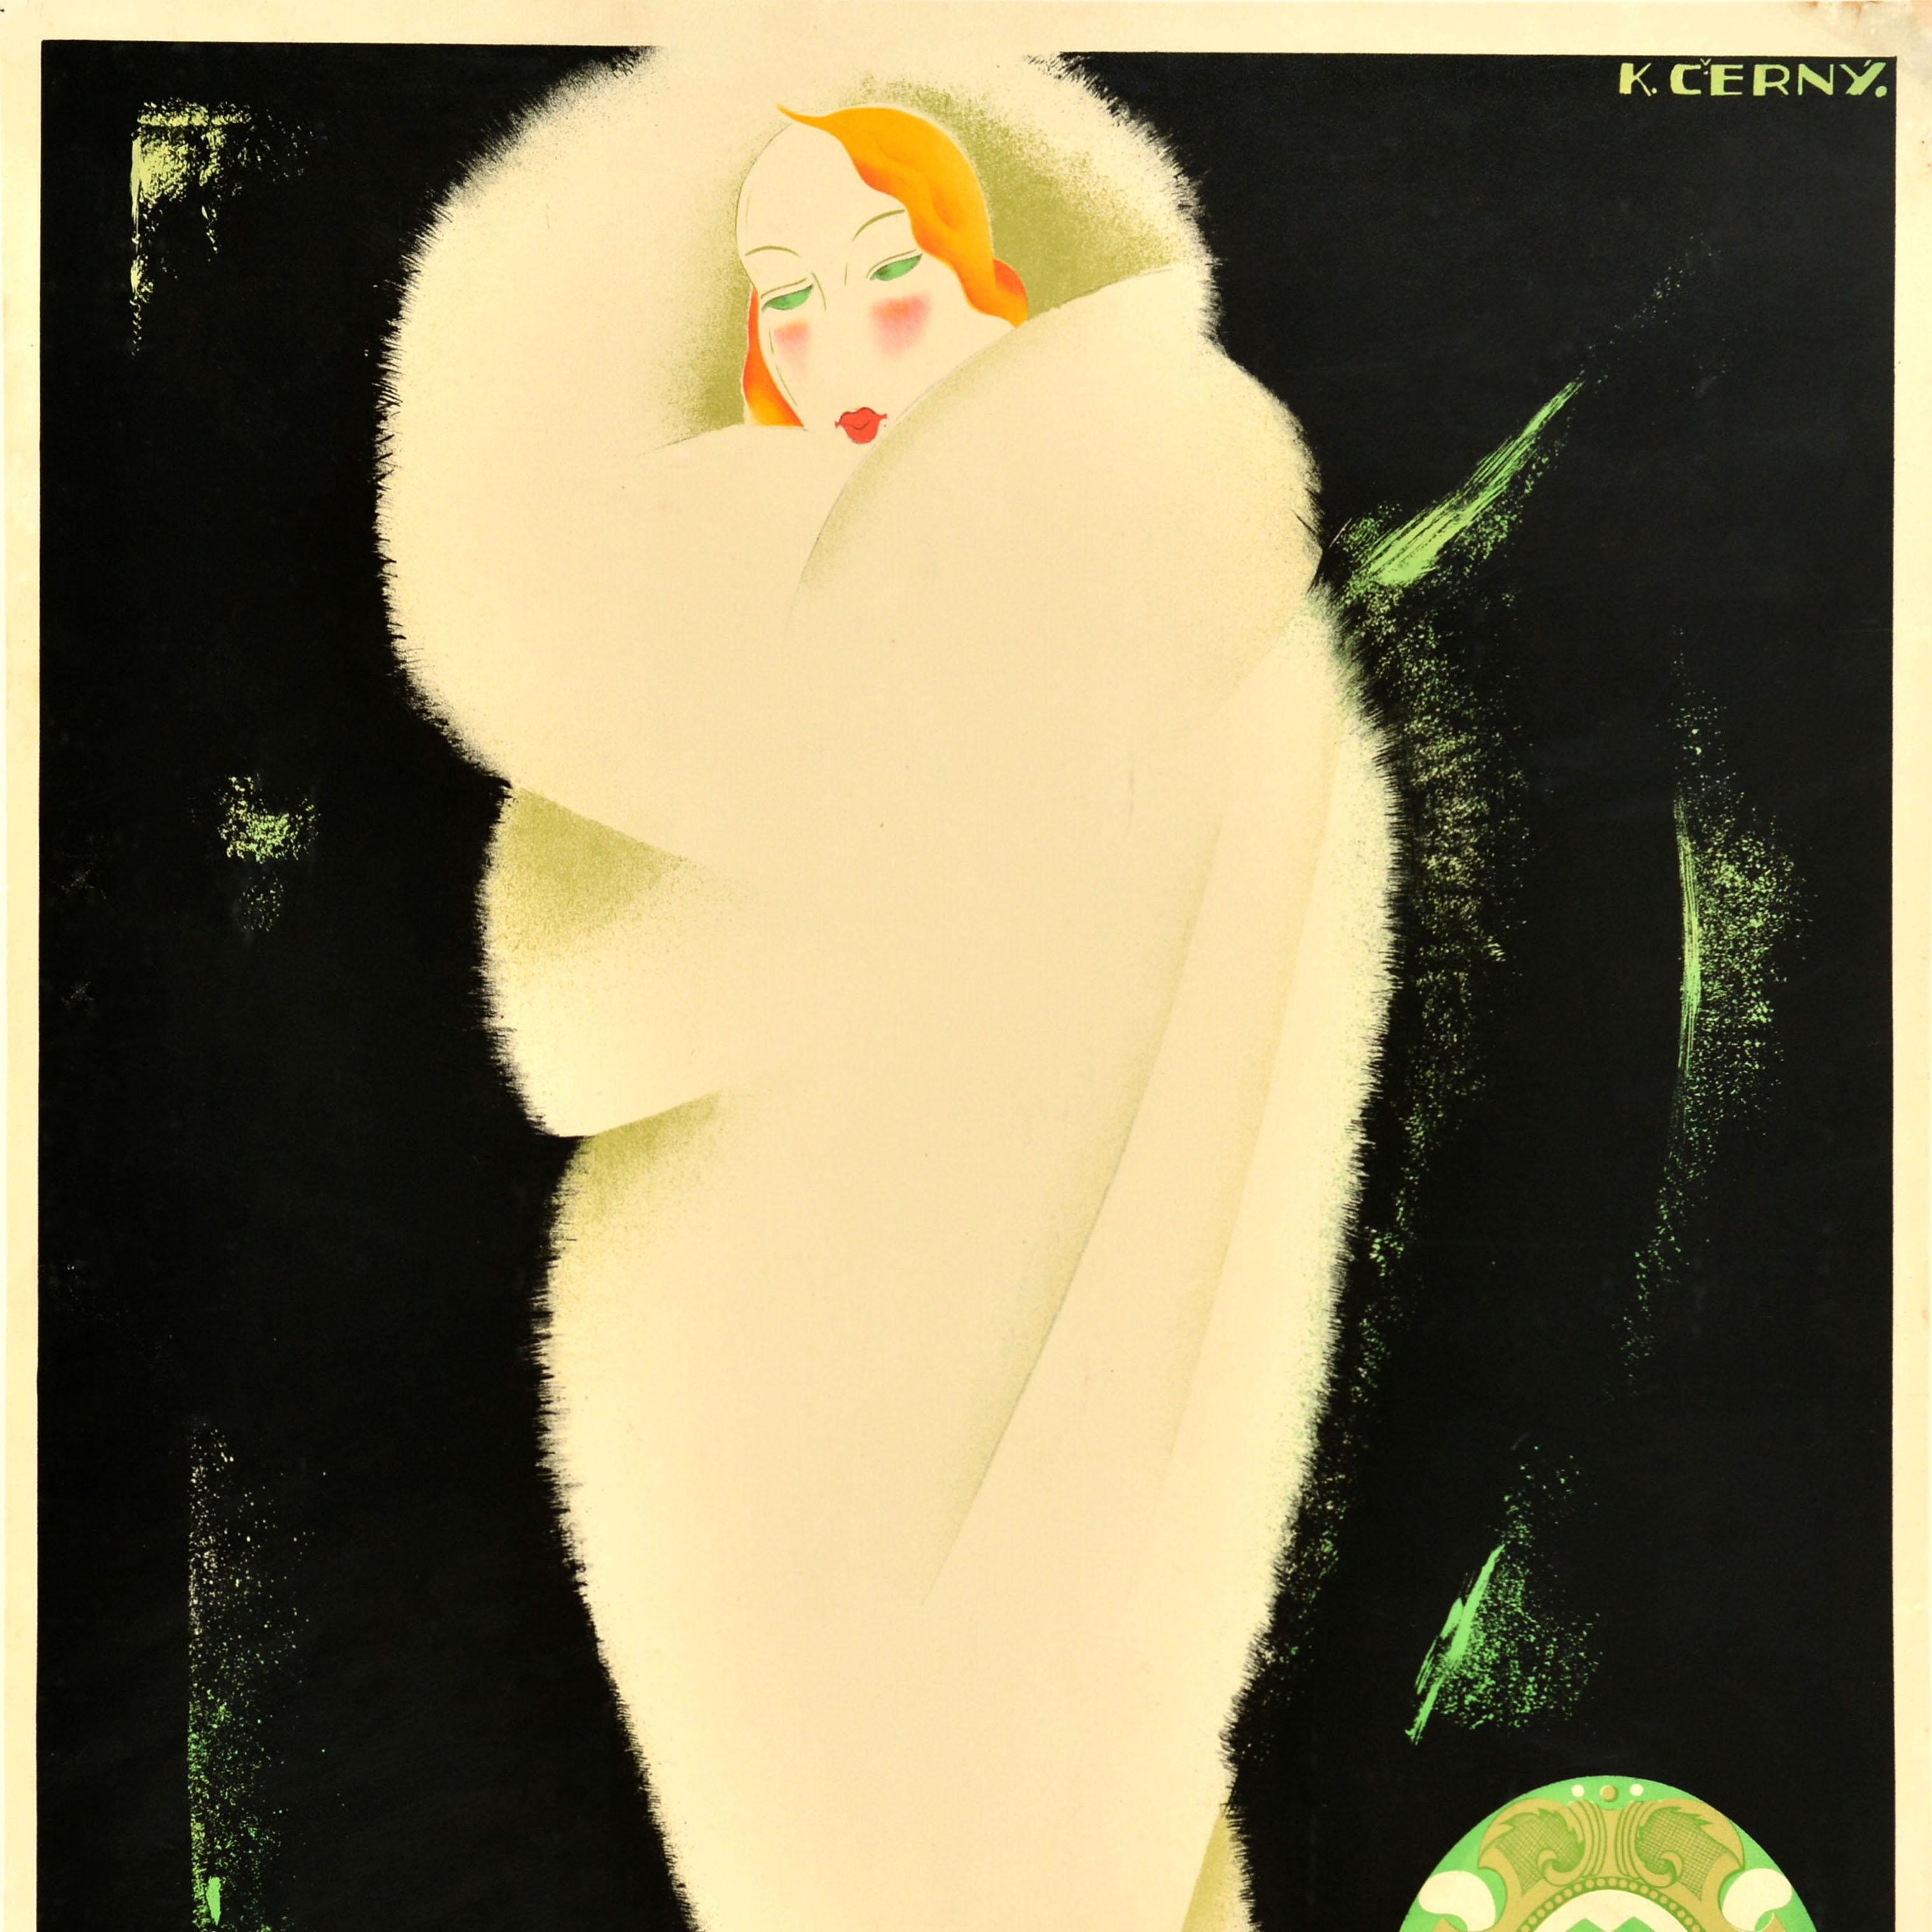 Original Vintage Spanish Advertising Poster Tapbioles Y Pirretas Fur Clothing - Art Deco Print by Unknown